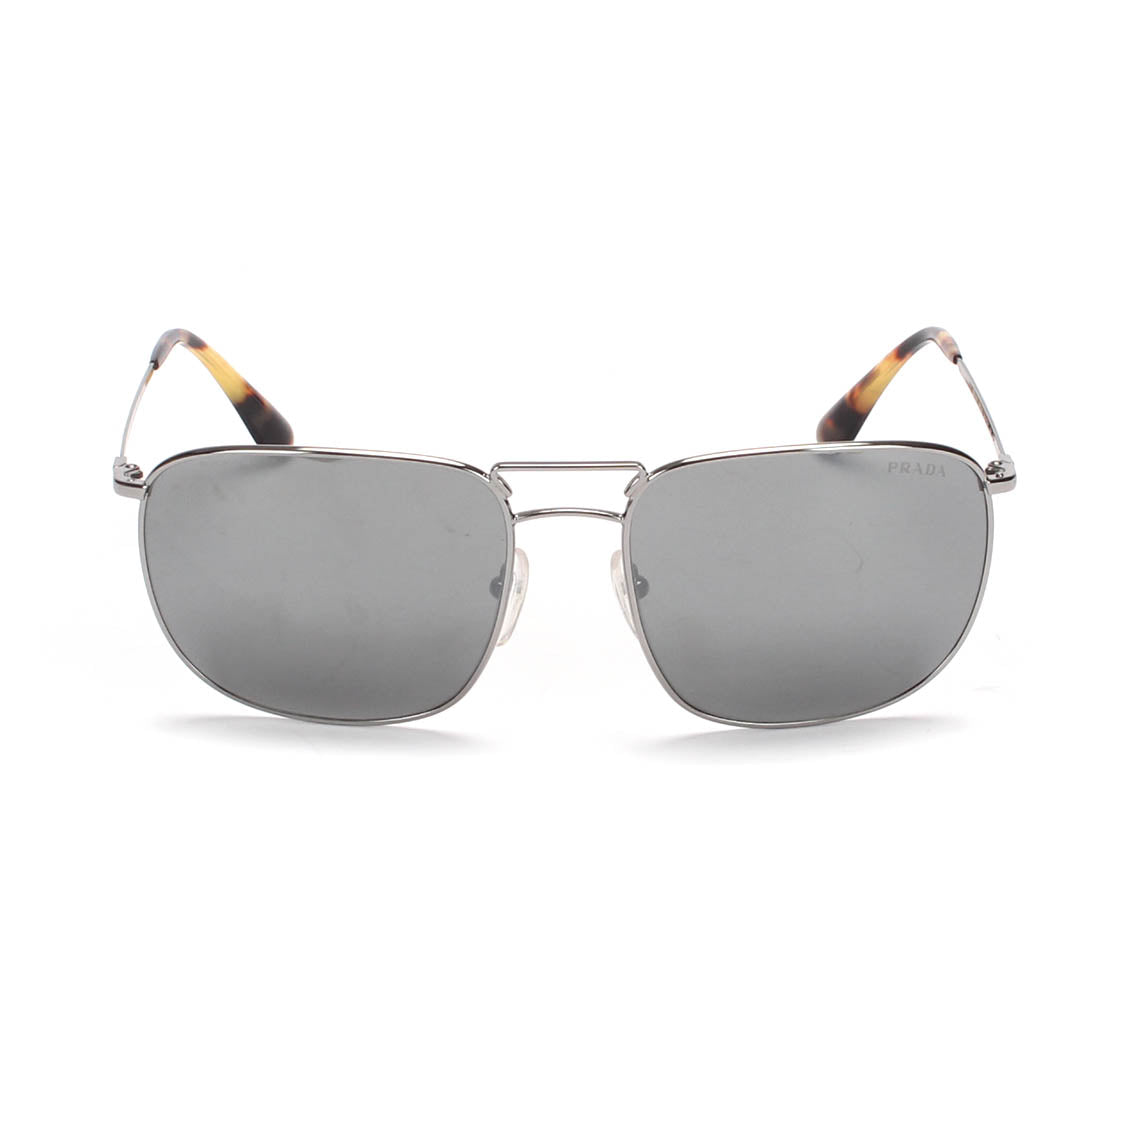 Prada Polarized Aviators Metal Sunglasses SPR 52T  in Excellent condition